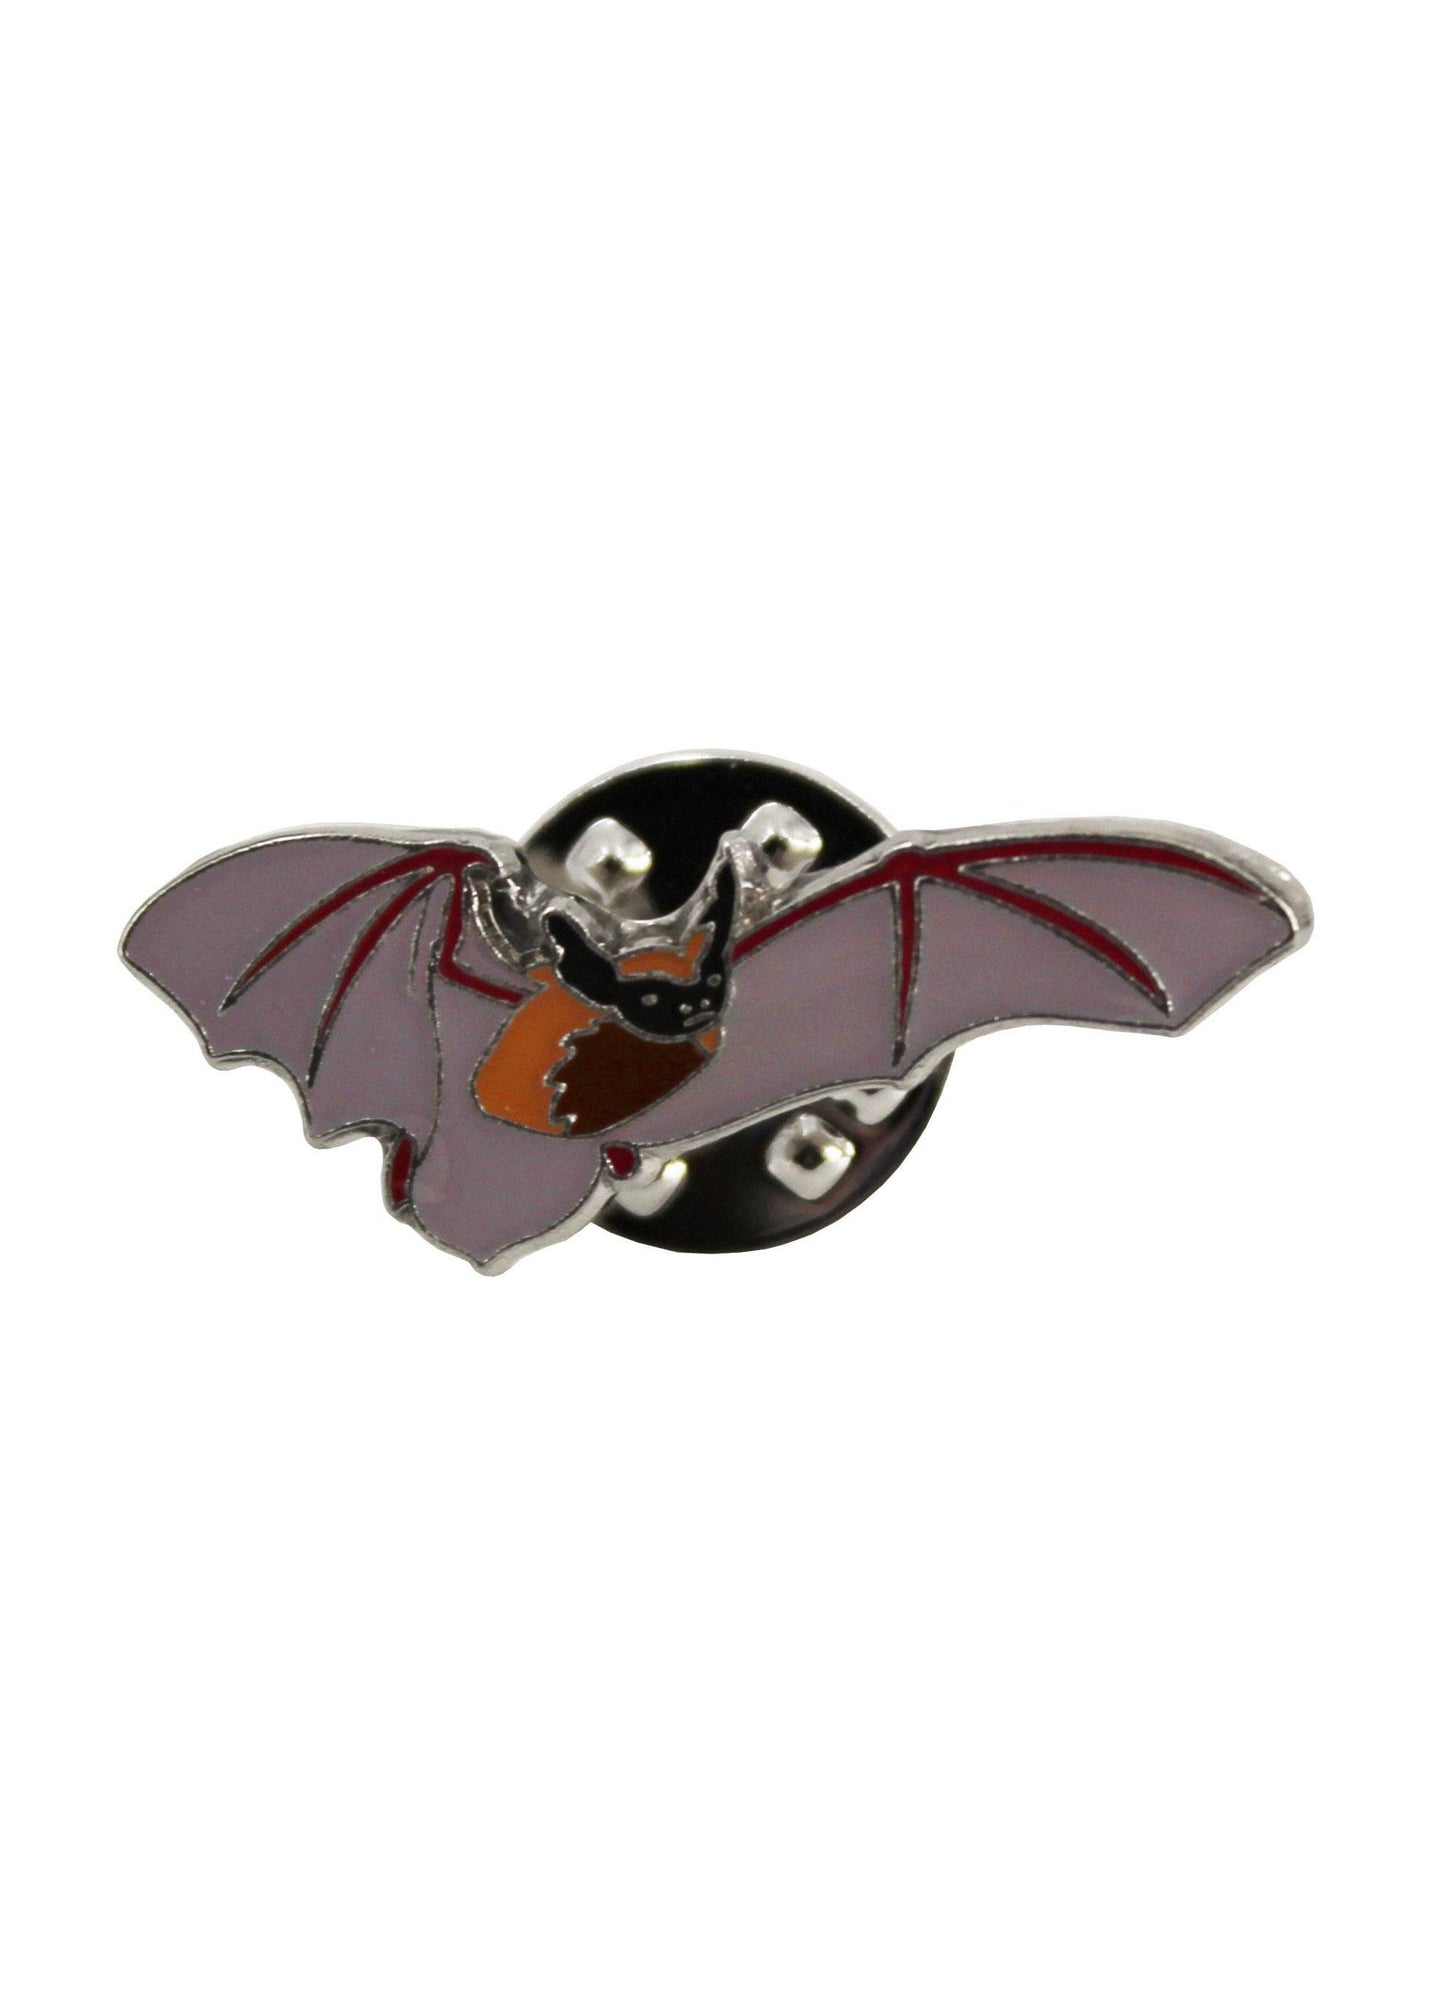 Bat Conservation Trust Common Pipistrelle Bat Pin Badge - Kate's Clothing